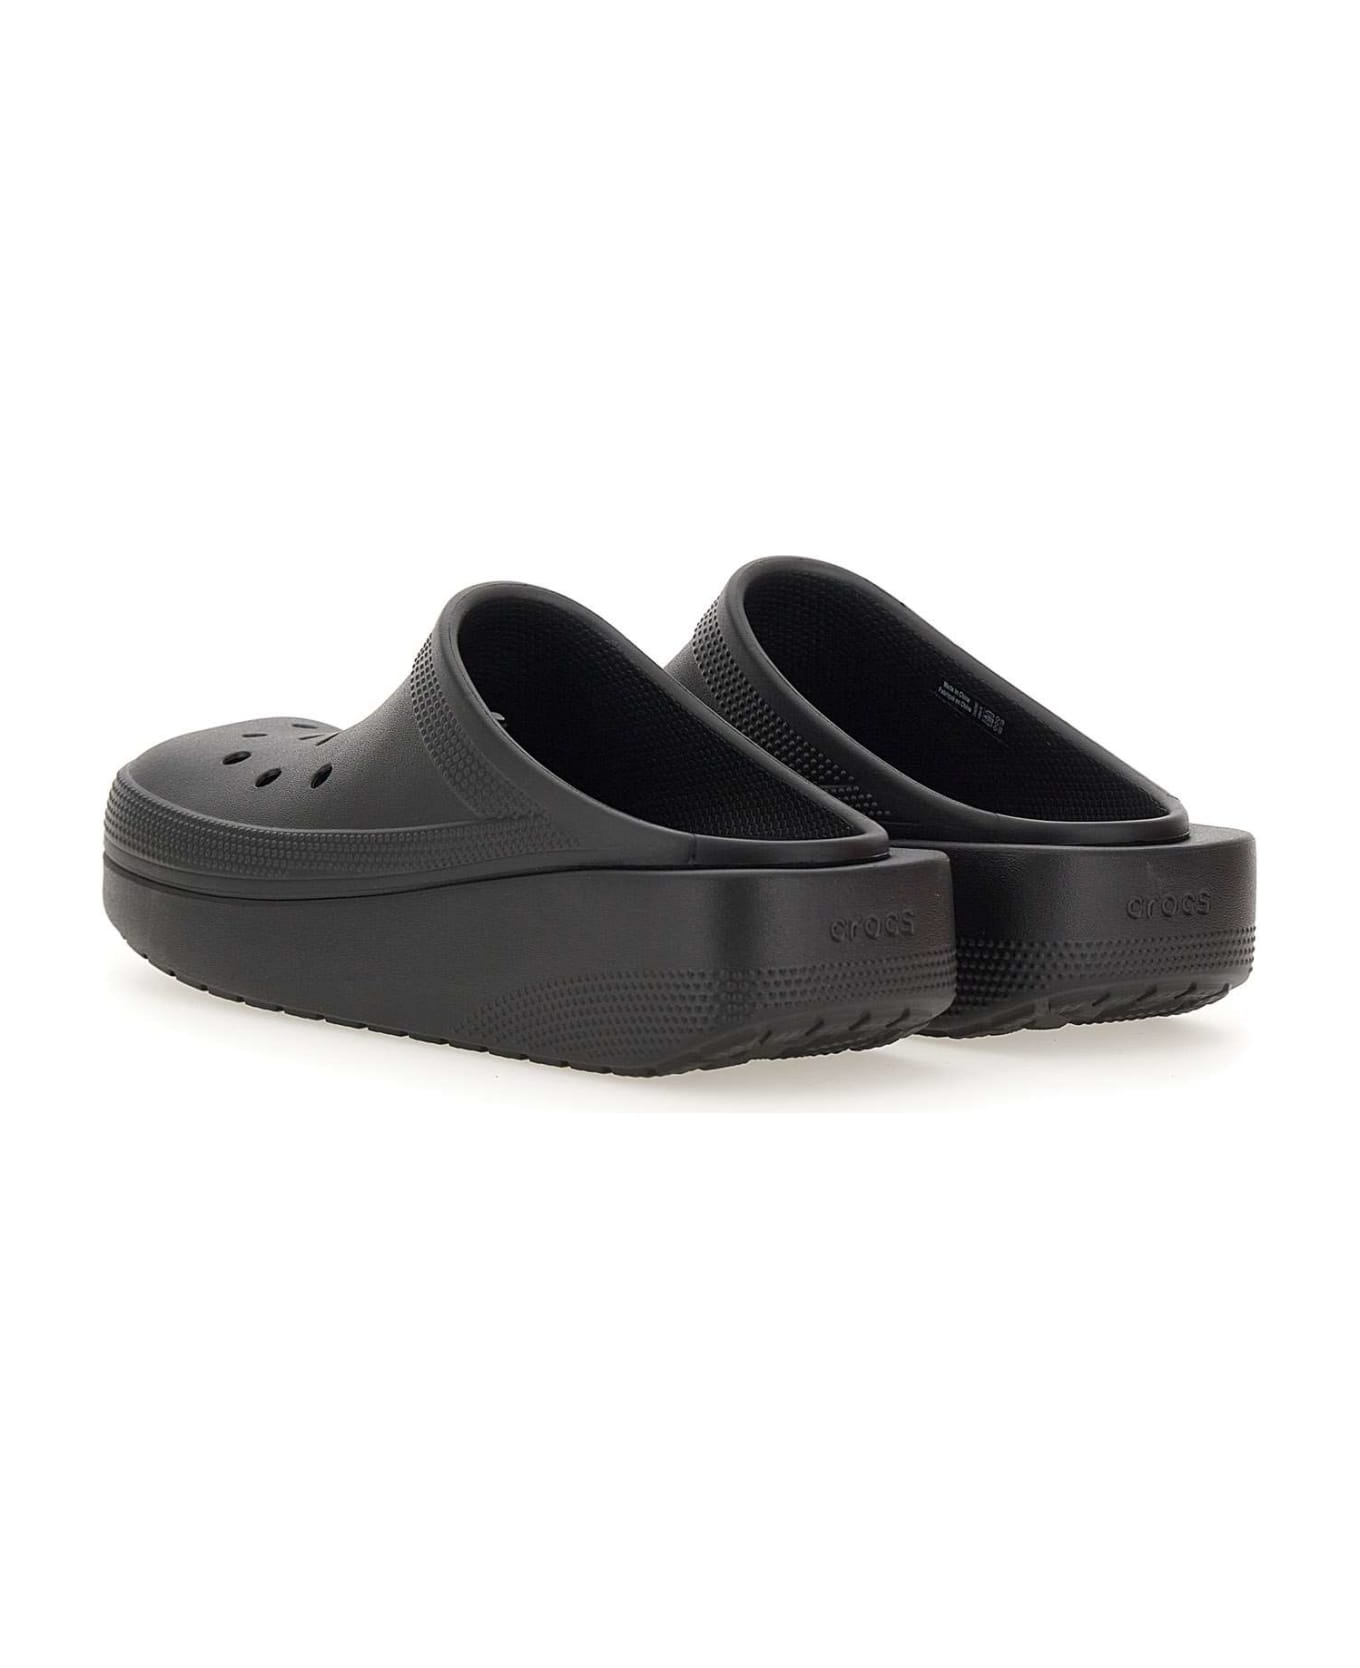 Crocs 'classic Blunt Toe' Slippers - Black